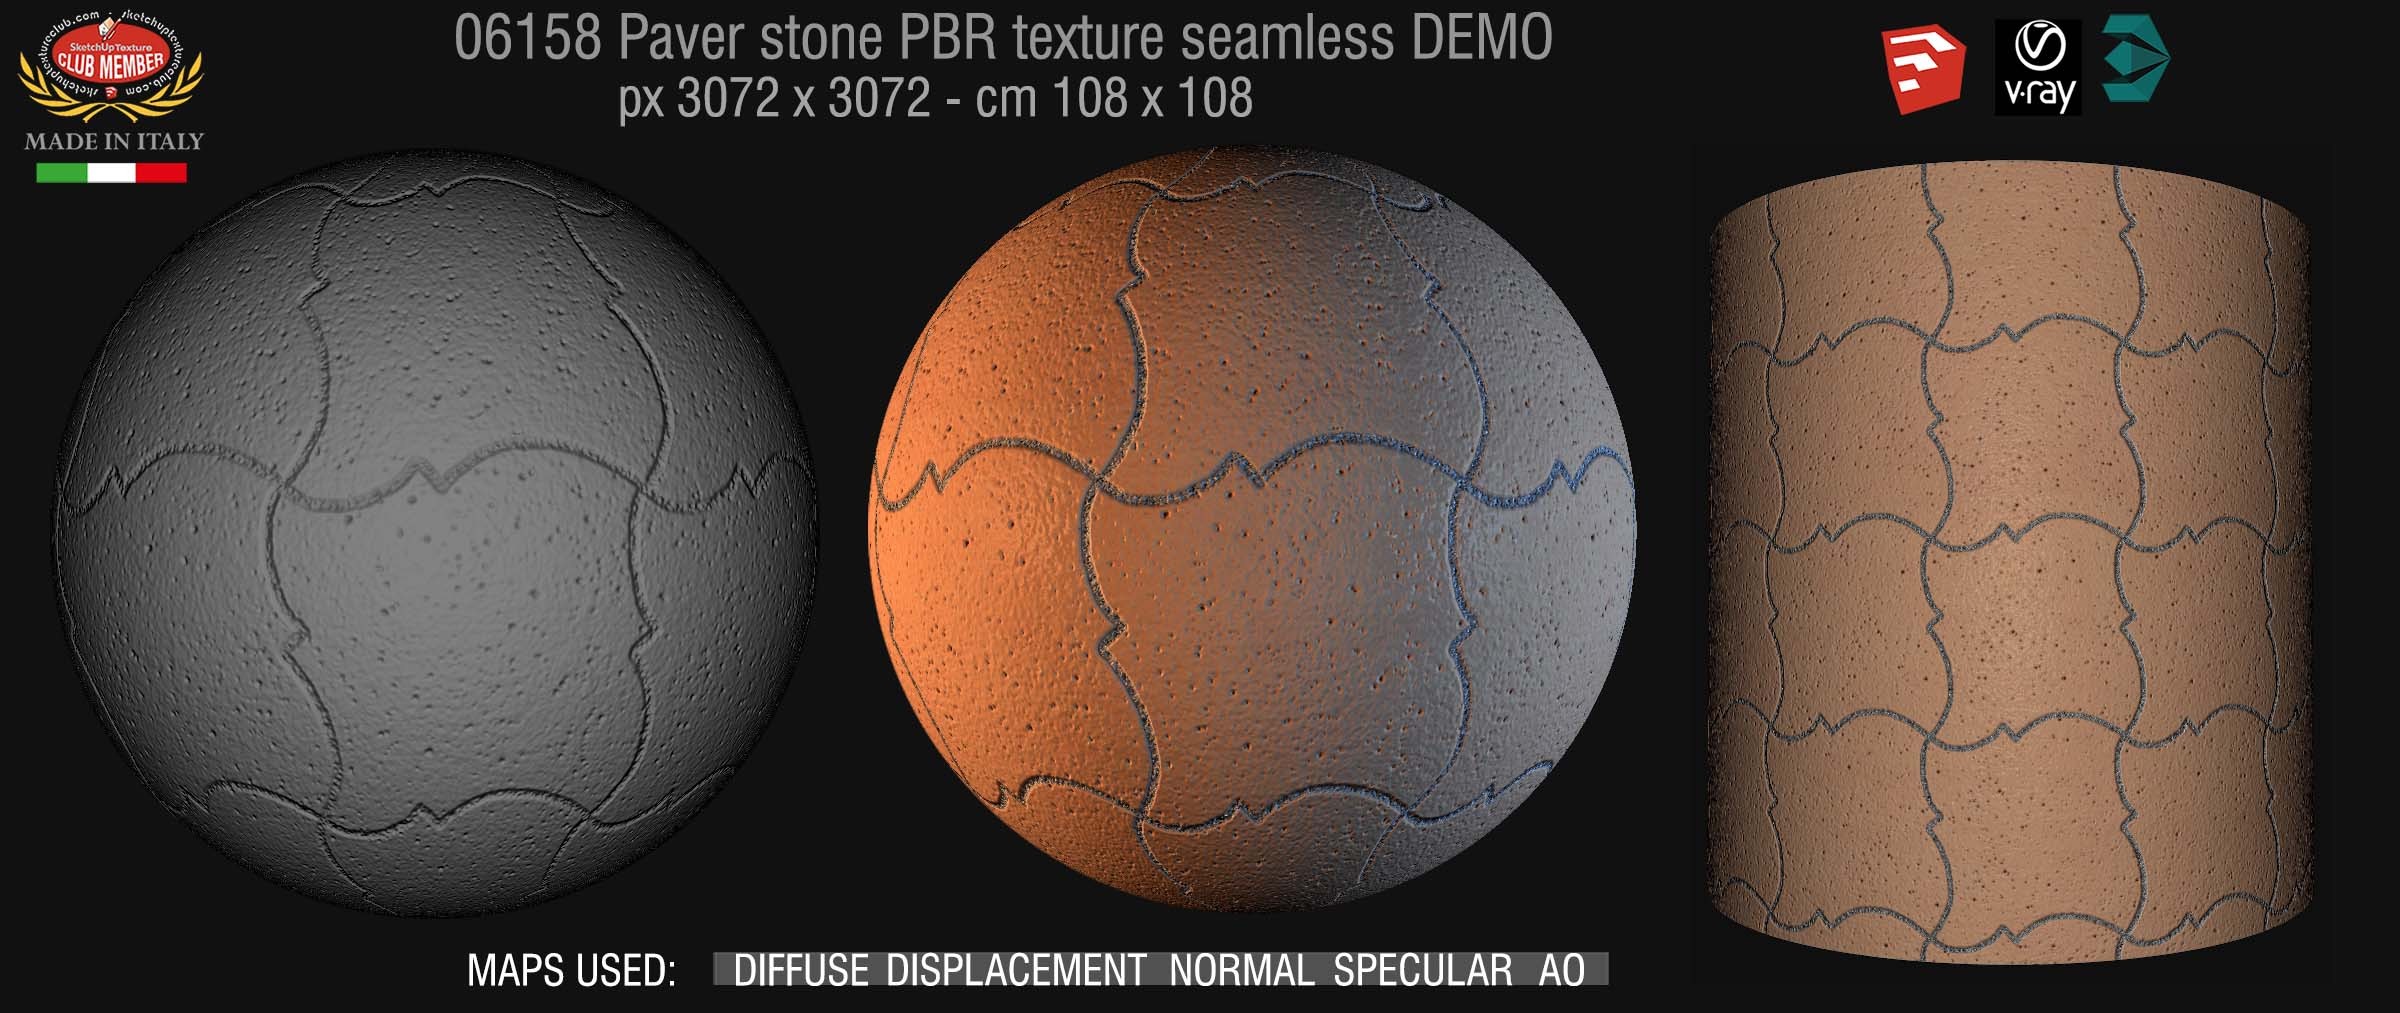 06158 paver stone PBR texture seamless DEMO